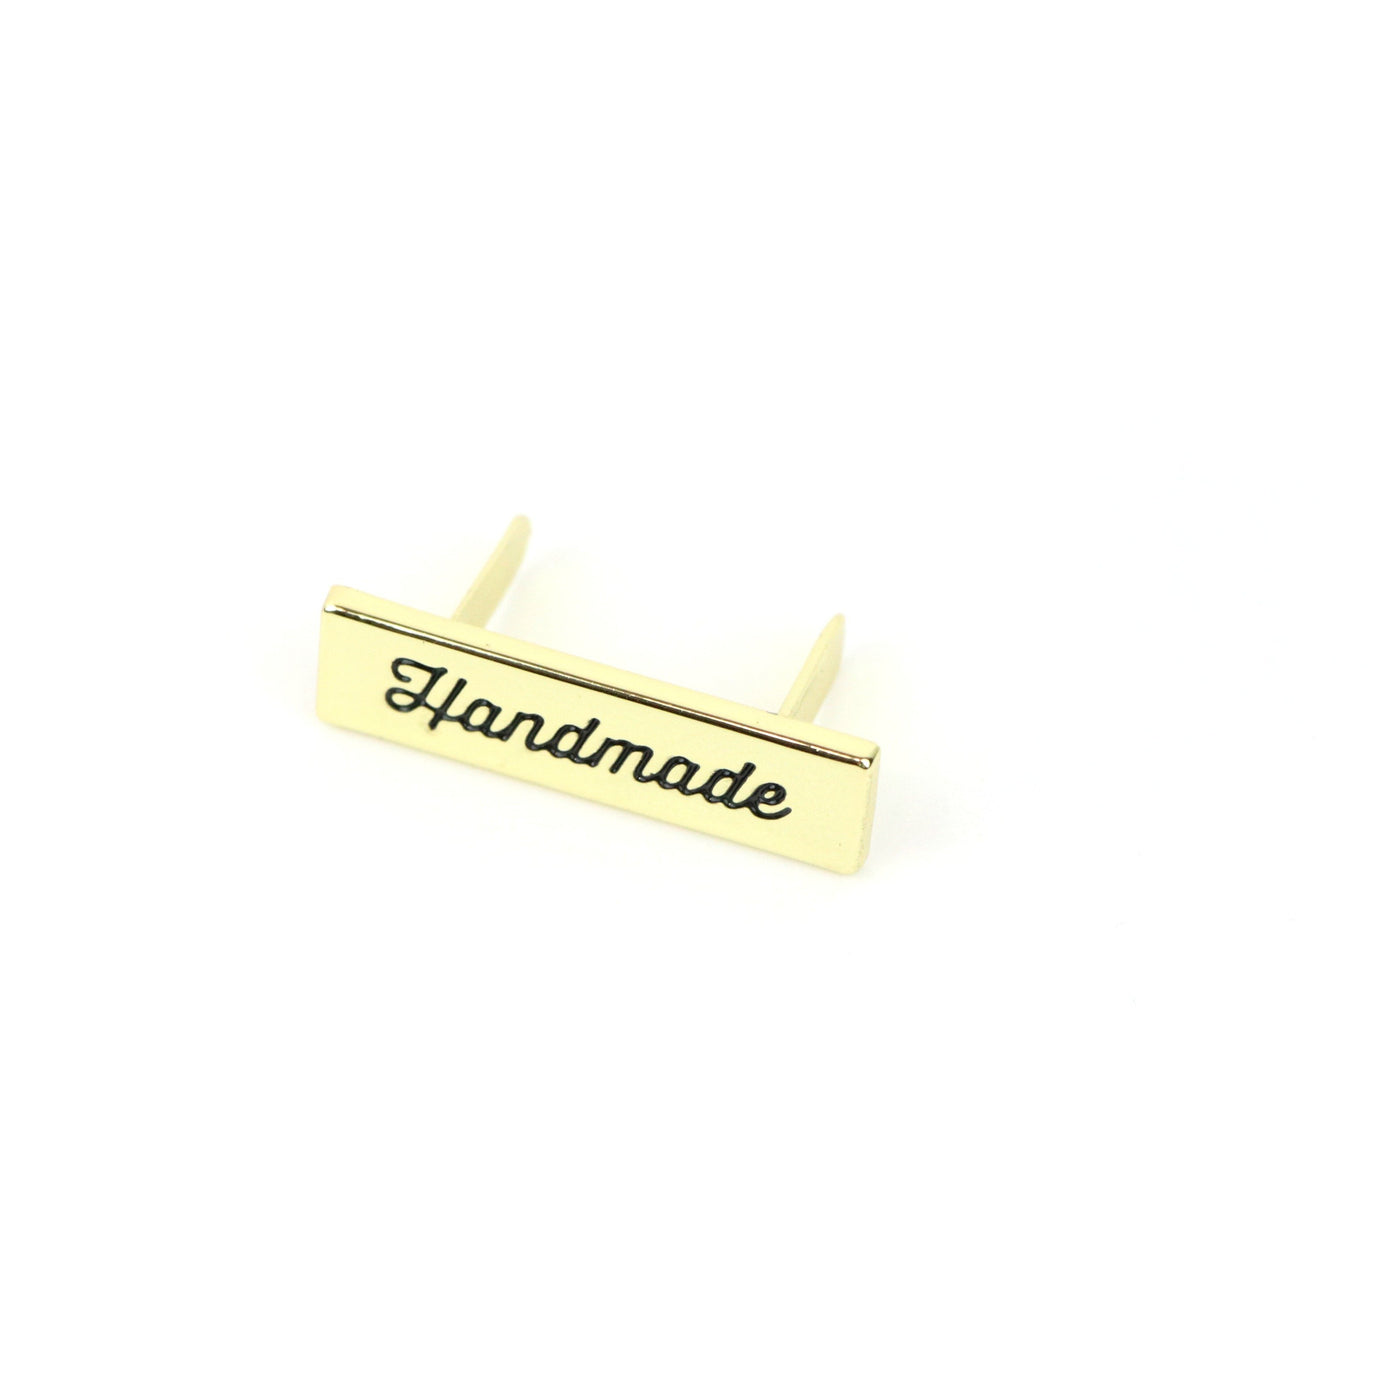 10 Handmade Label Metal Tags 25mm (1) Bronze Connector Handmade Crafts  Label